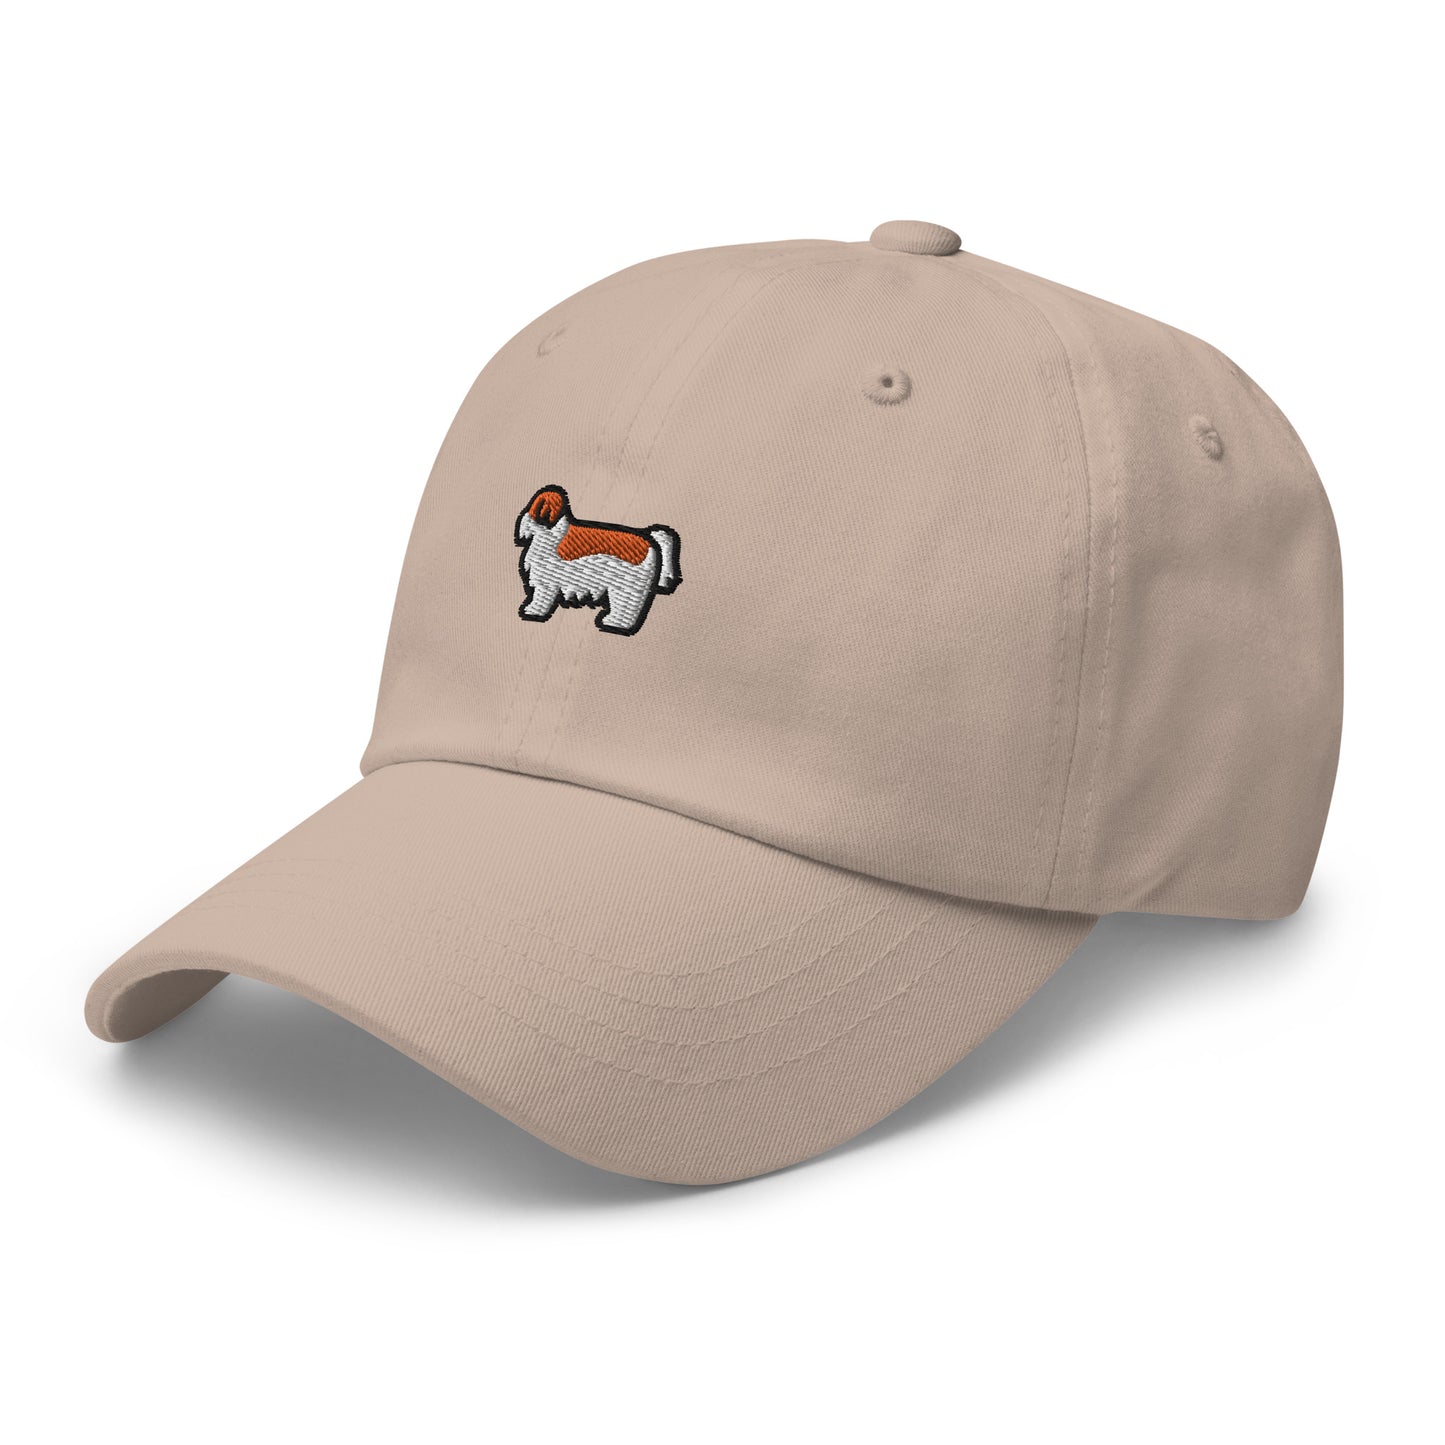 Shih Tzu Dog Embroidered Baseball Cap